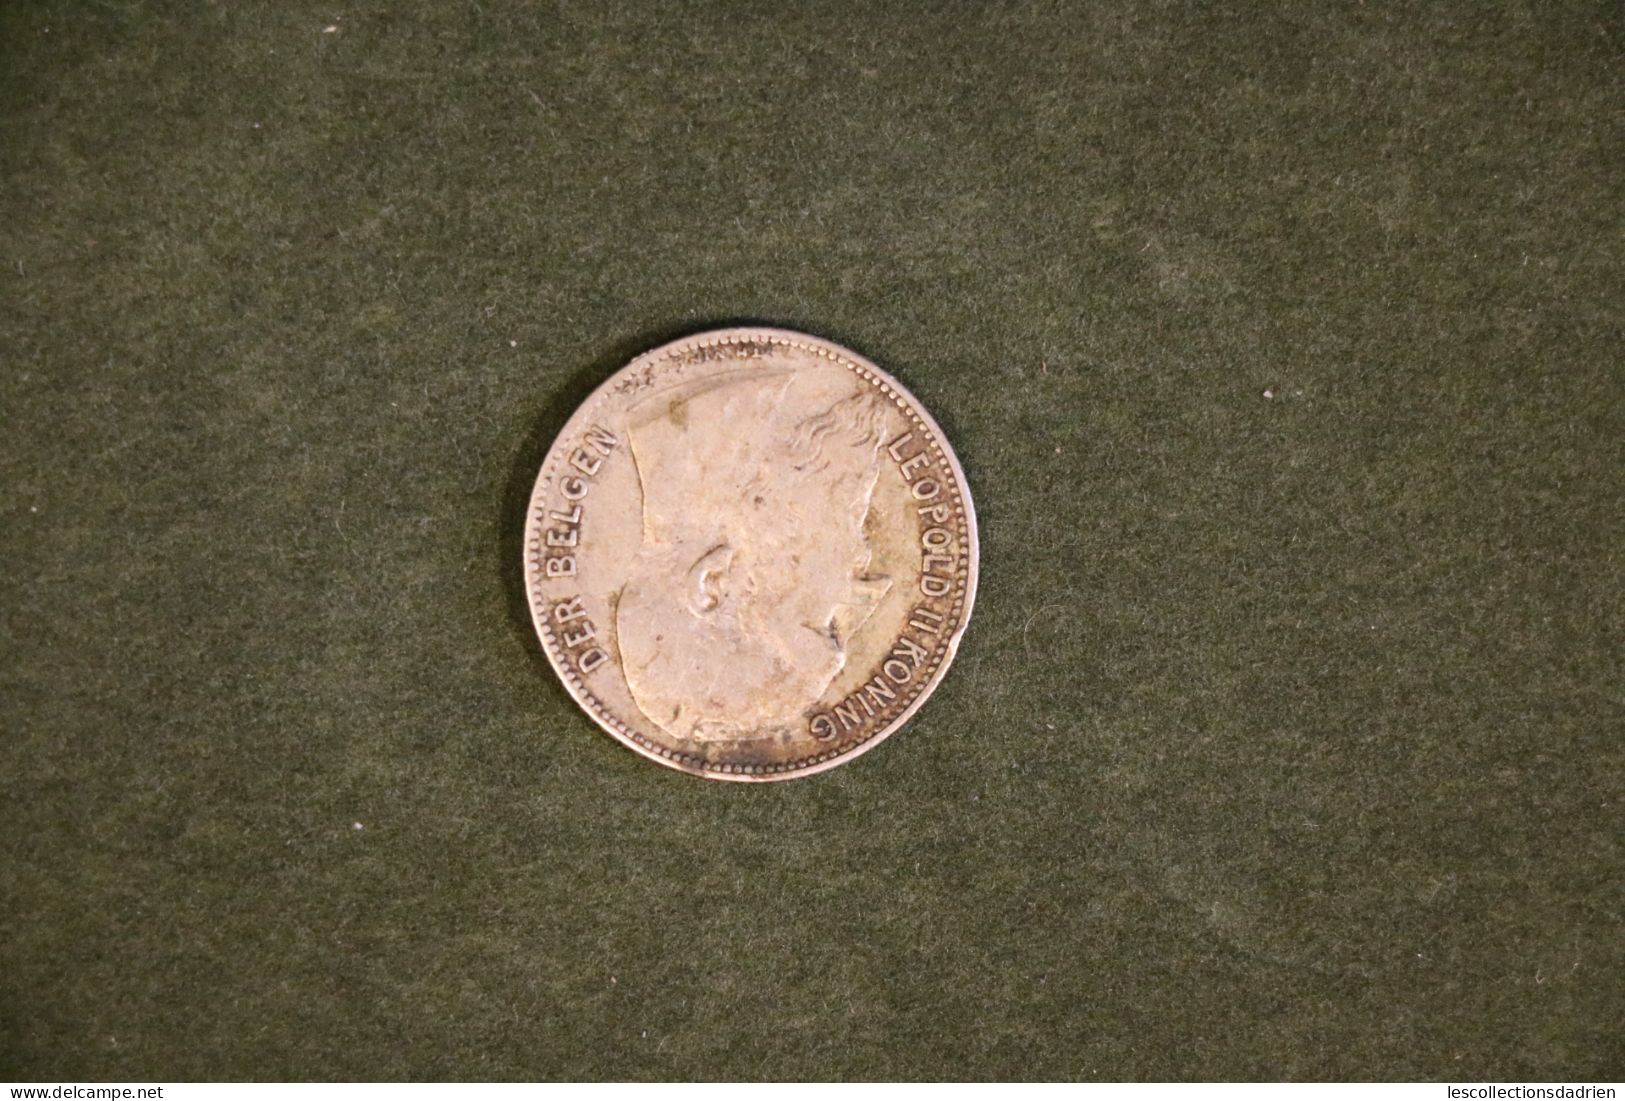 Pièce En Argent Belgique 1 Francs 1909 FL -  Belgian Silver Coin - 1 Frank